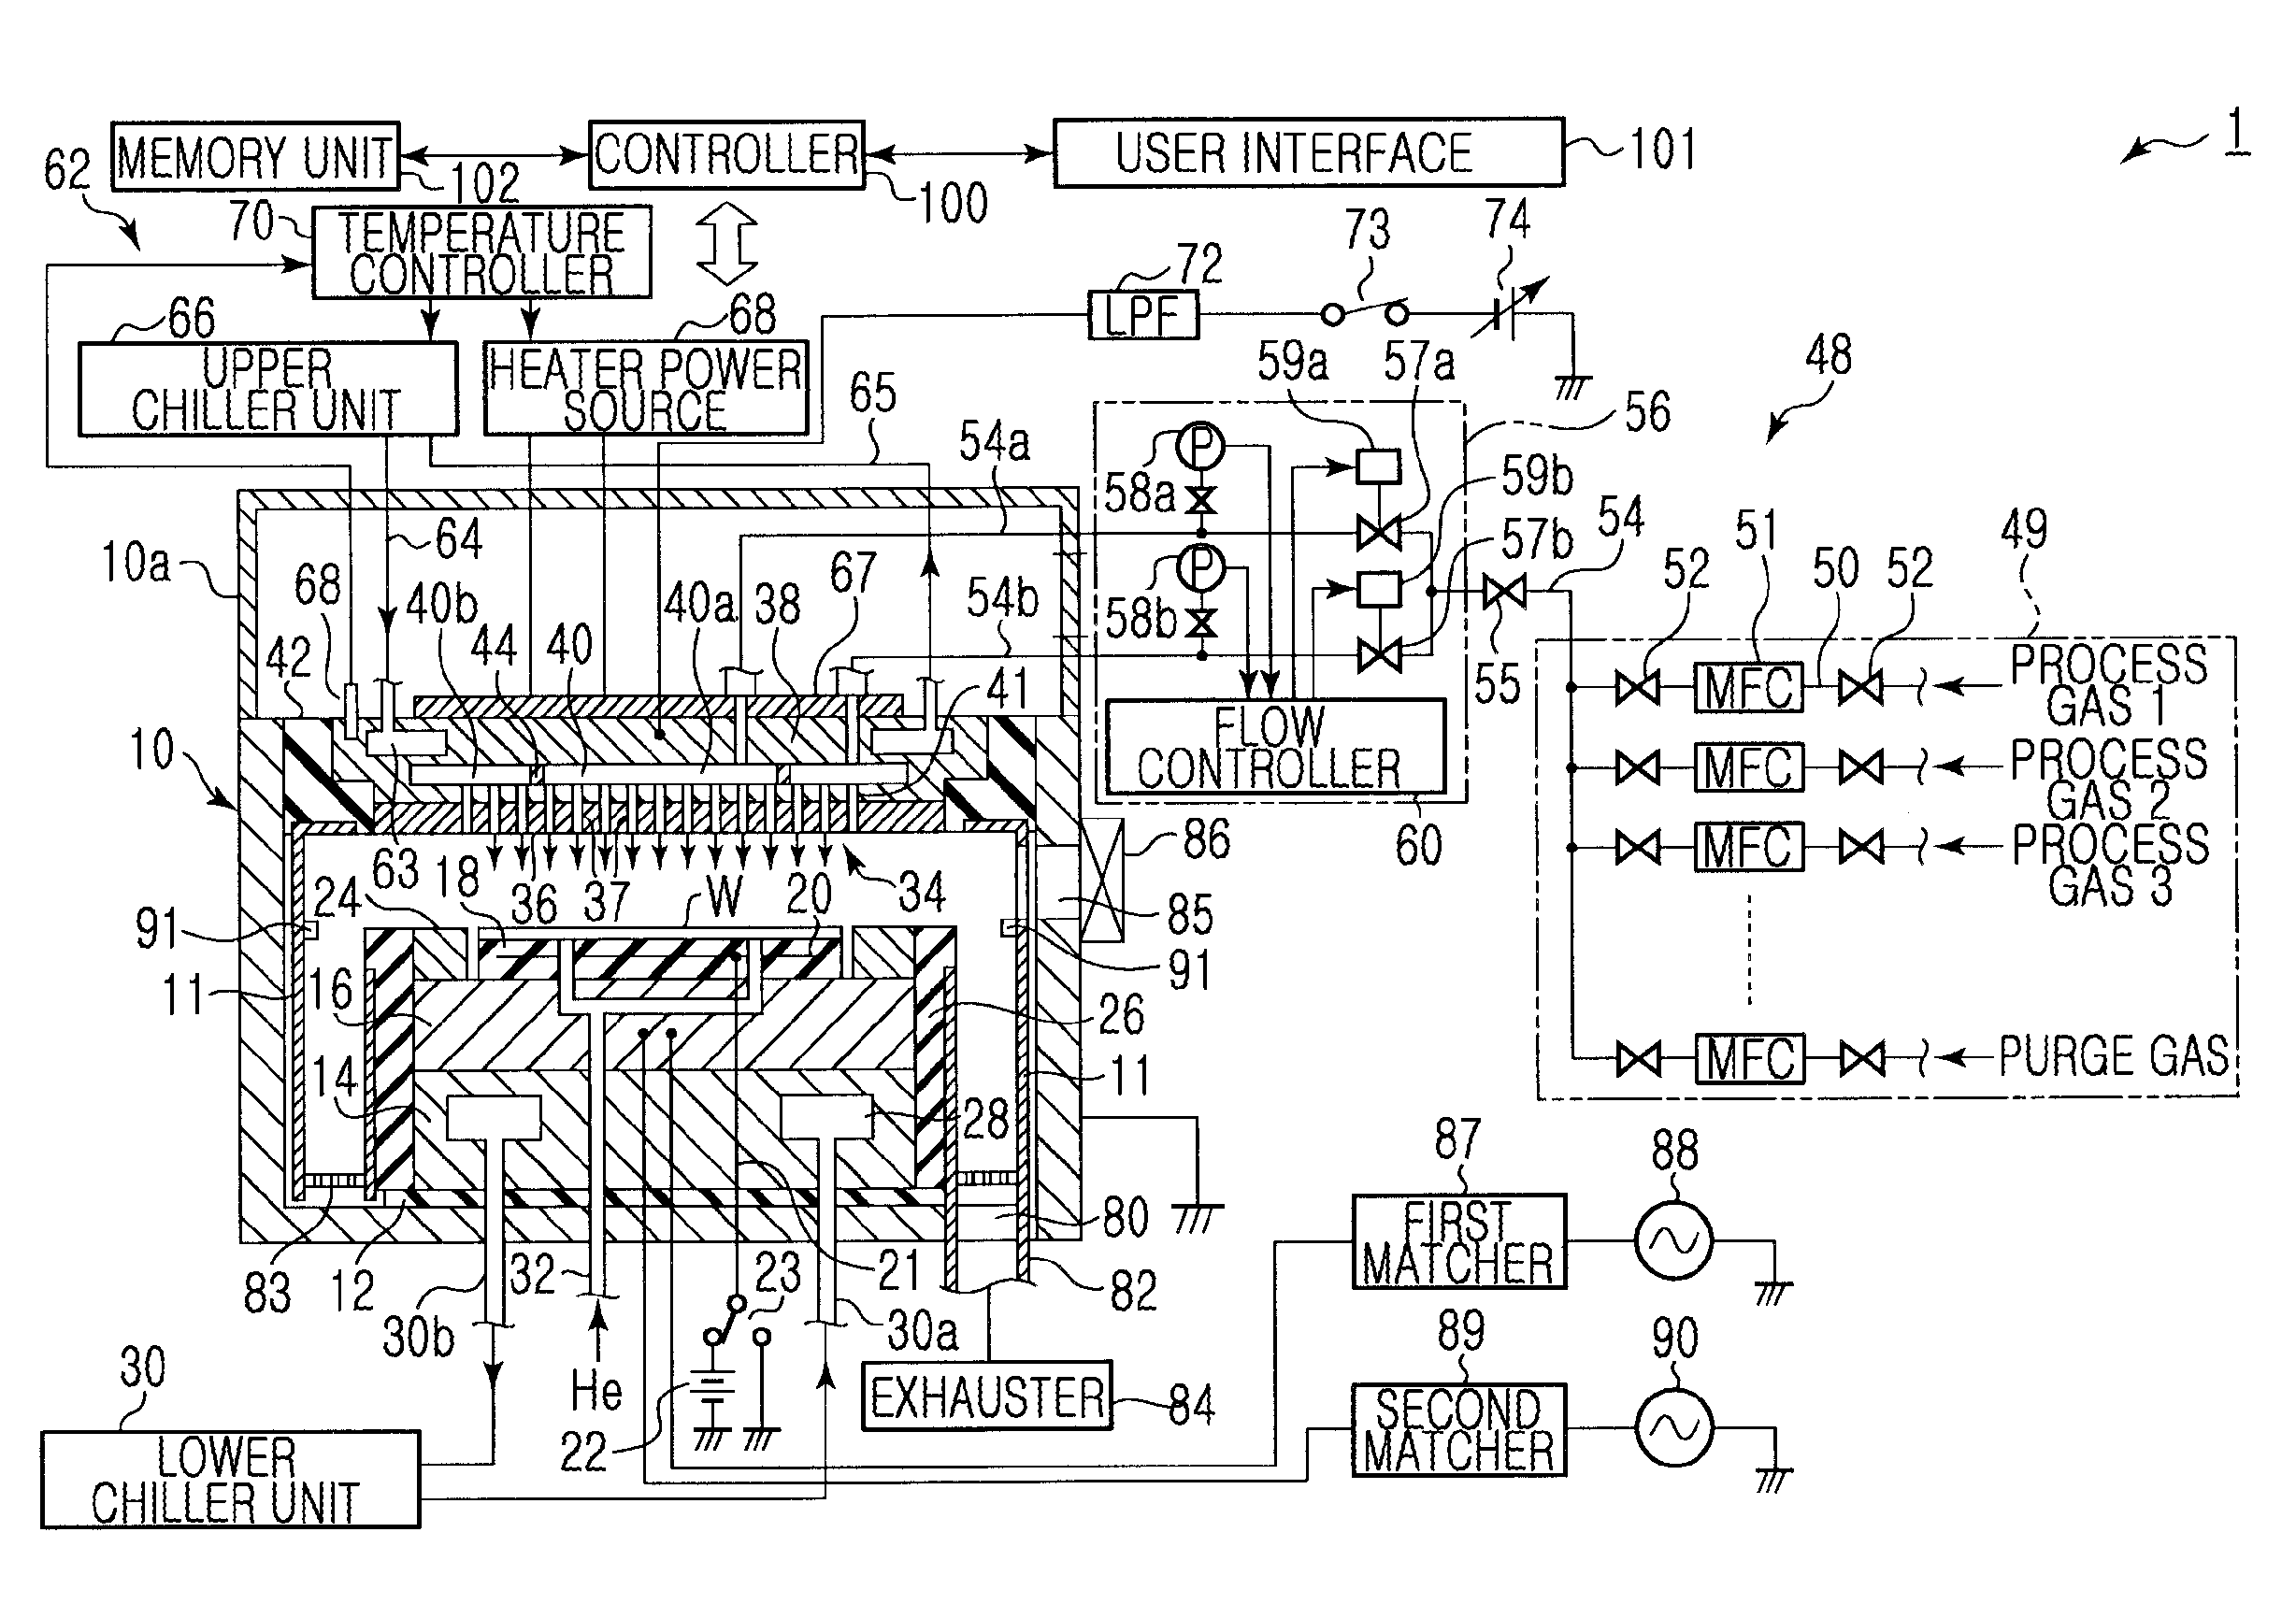 Plasma processing apparatus, plasma processing method, and non-transitory computer-readable medium